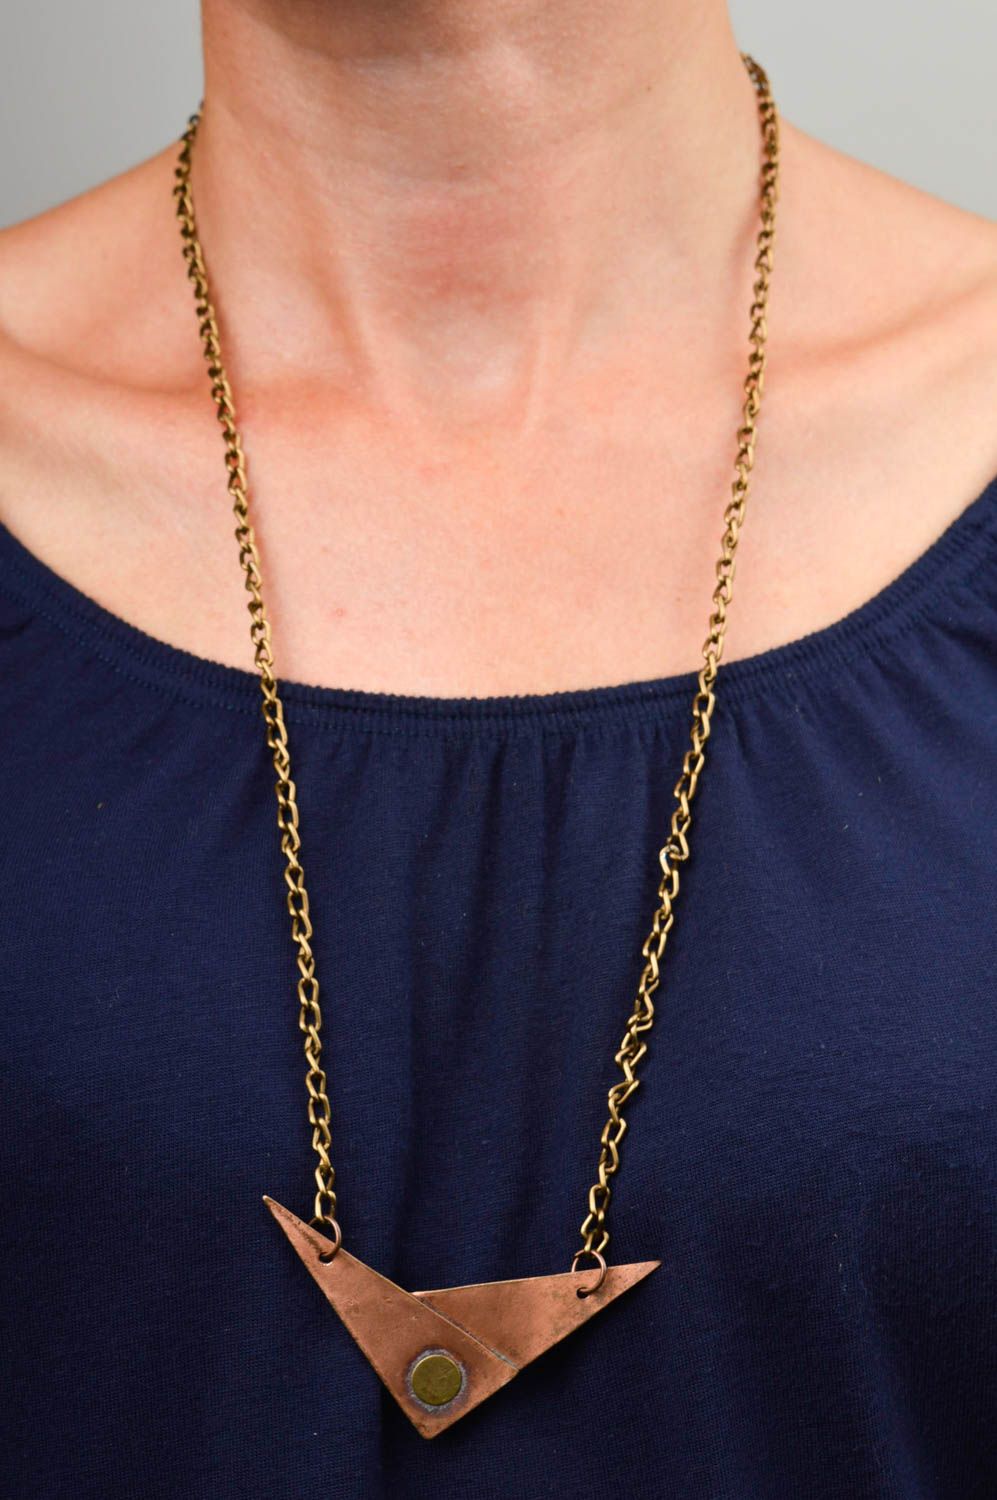 Handmade designer pendant stylish copper pendant unusual neck accessory photo 1